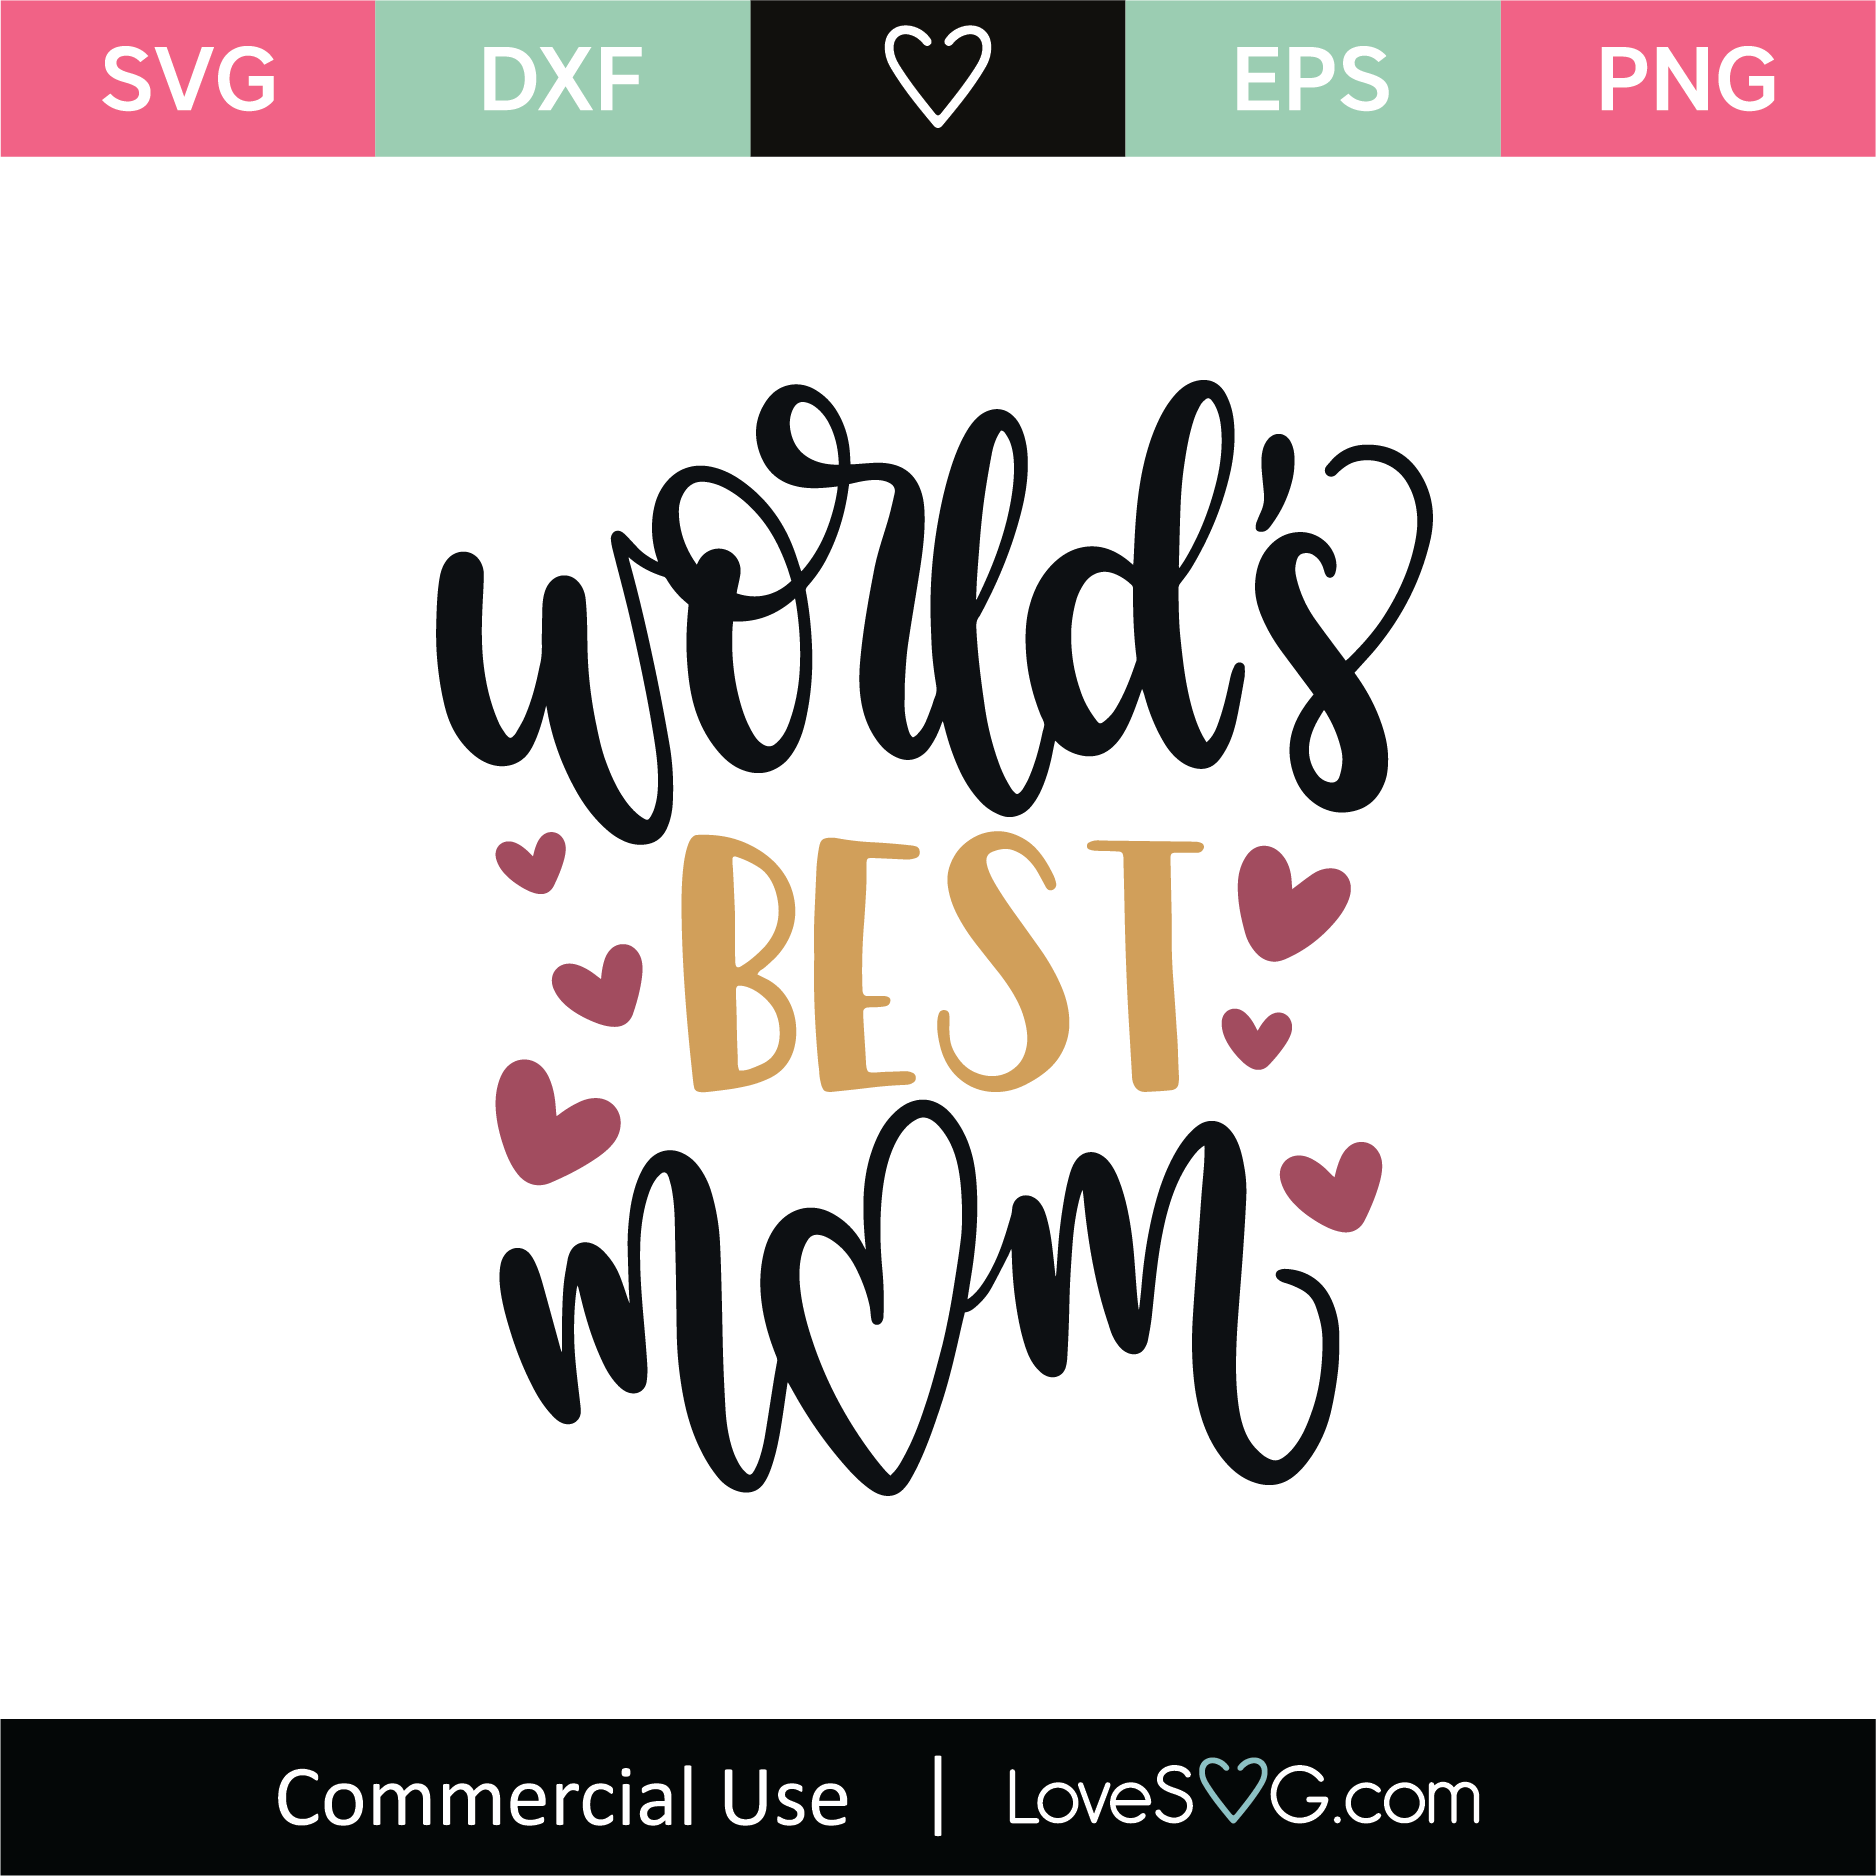 World's Best Mom SVG Cut File 3 - Lovesvg.com